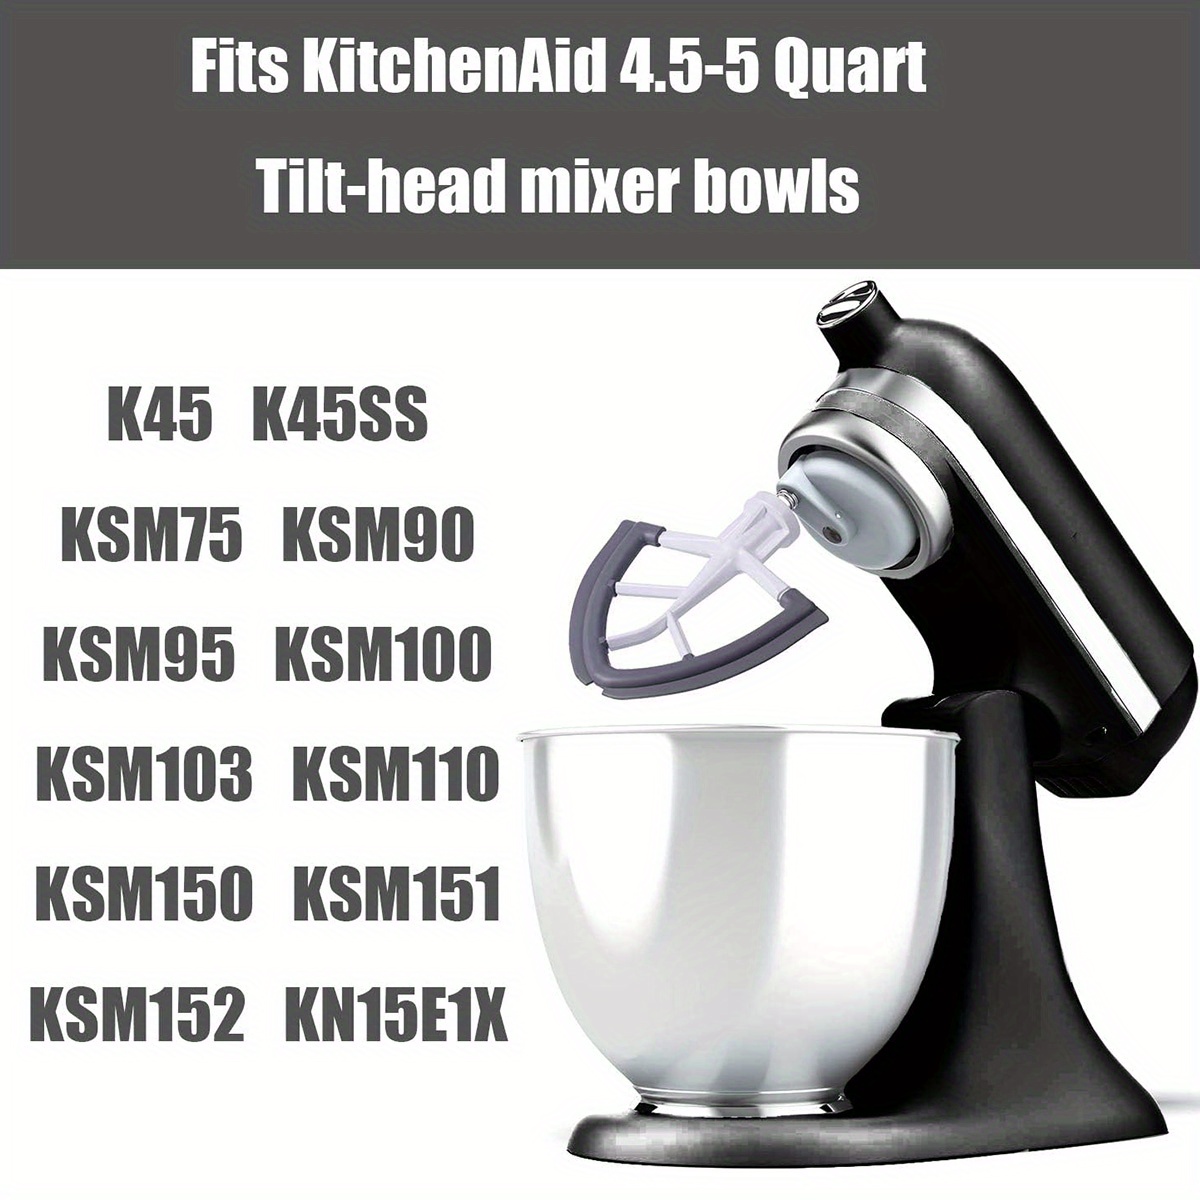 Stainless Steel Flex Edge Beater for KitchenAid Mixer, Fits Tilt-Head Stand  Mixer Bowls For 4.5-5 Quart Bowls